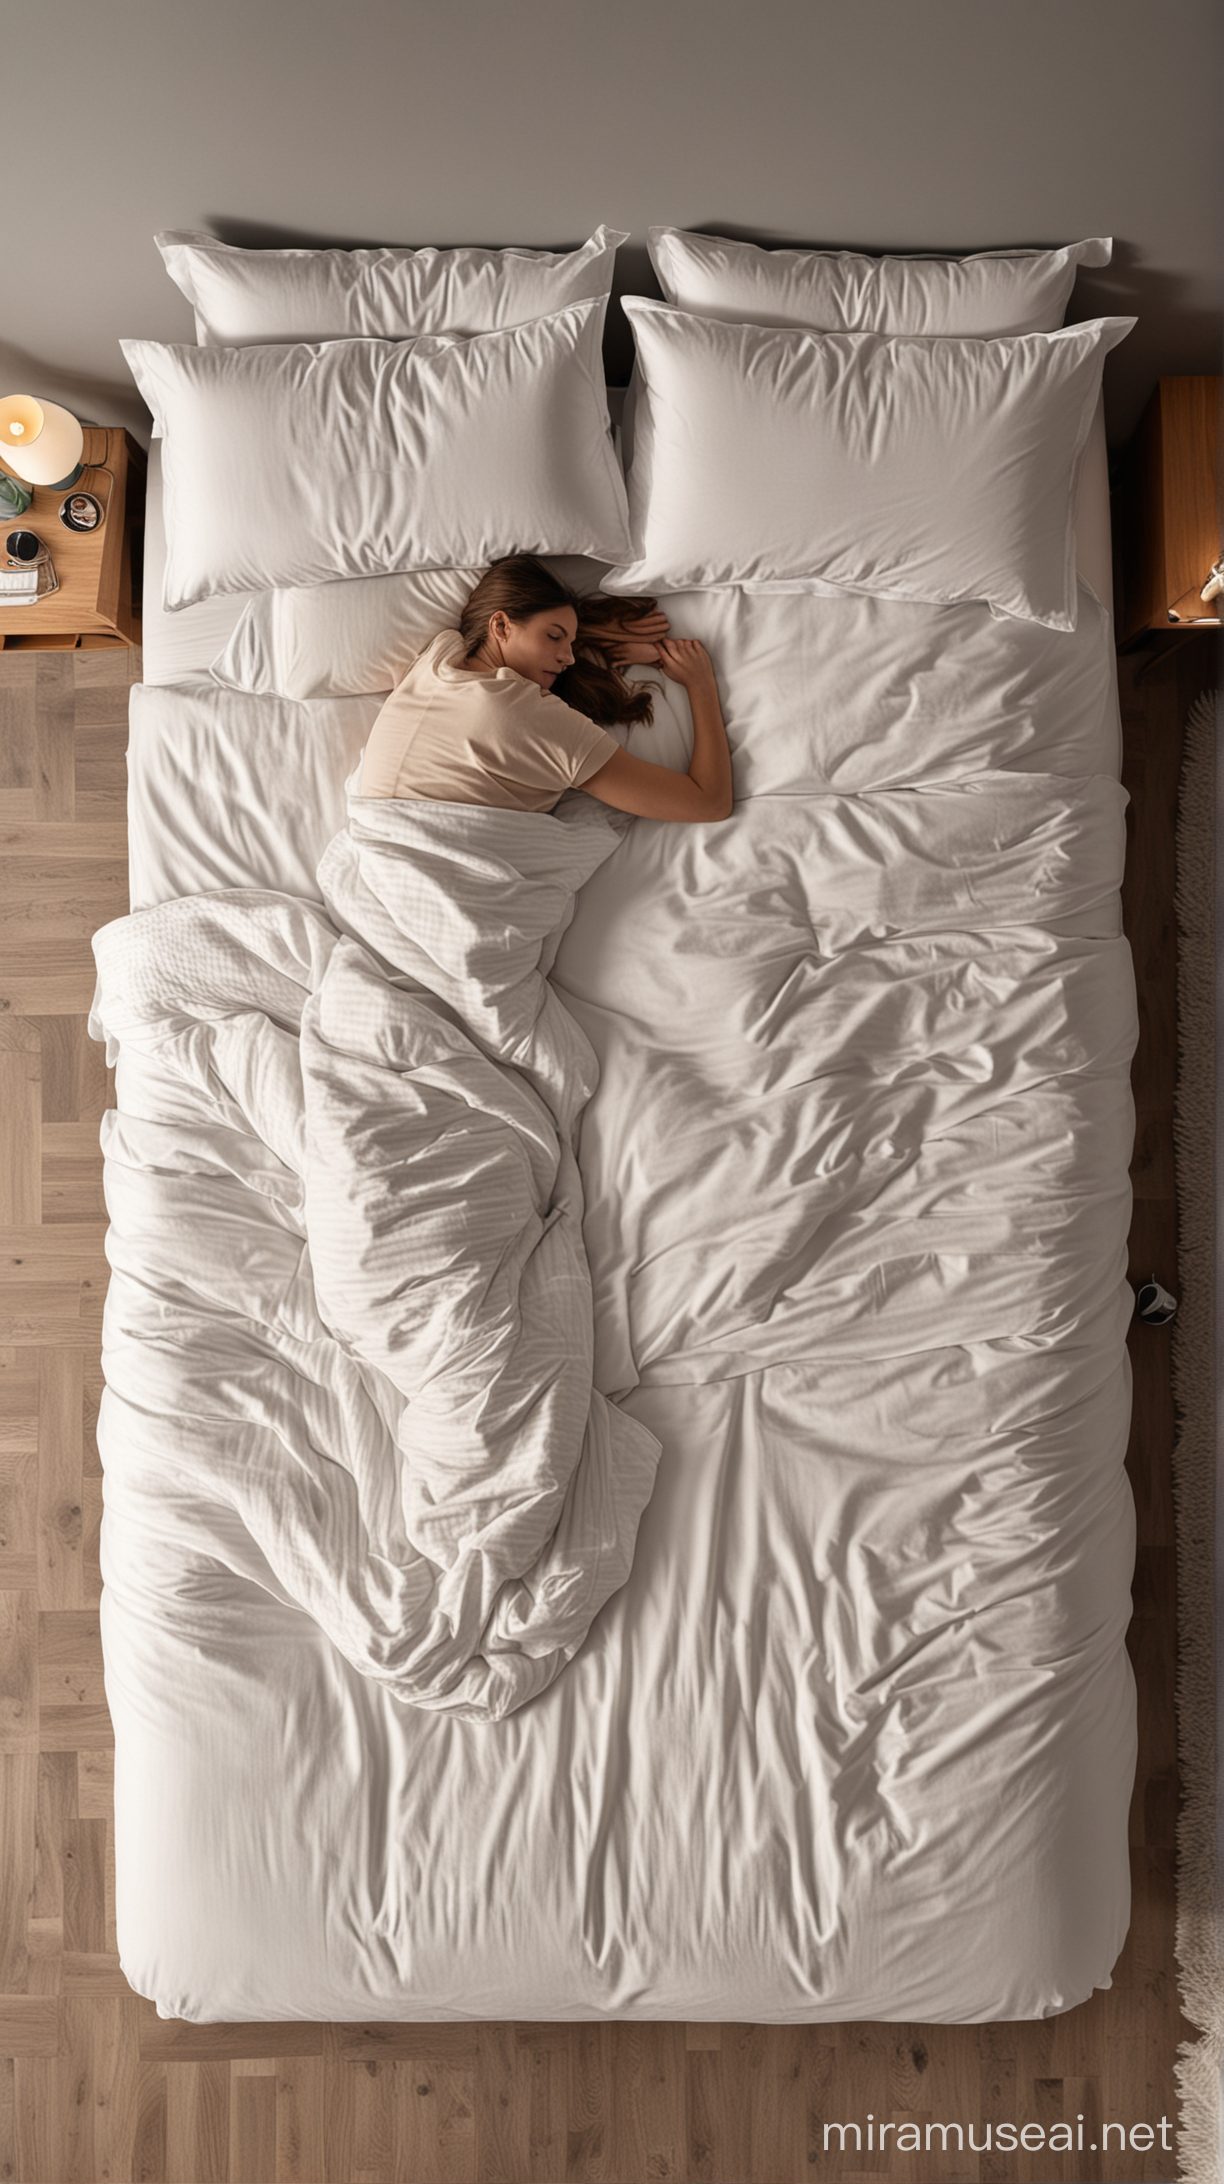 Solo Sleeper on Double Bed in Cozy Bedroom Top View